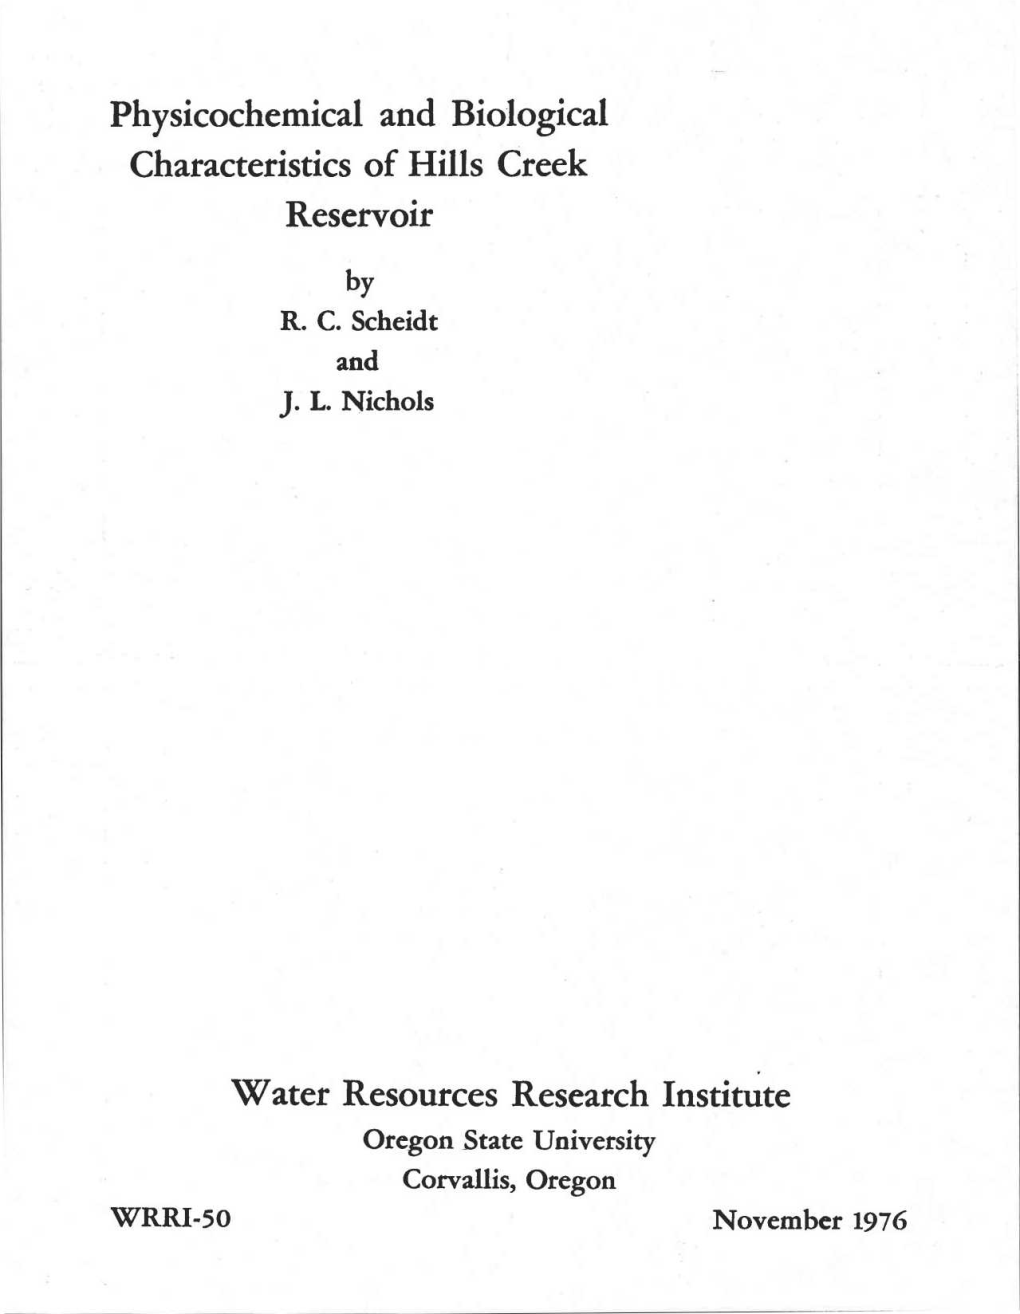 Physicochemical and Biological Characteristics of Hills Creek Reservoir